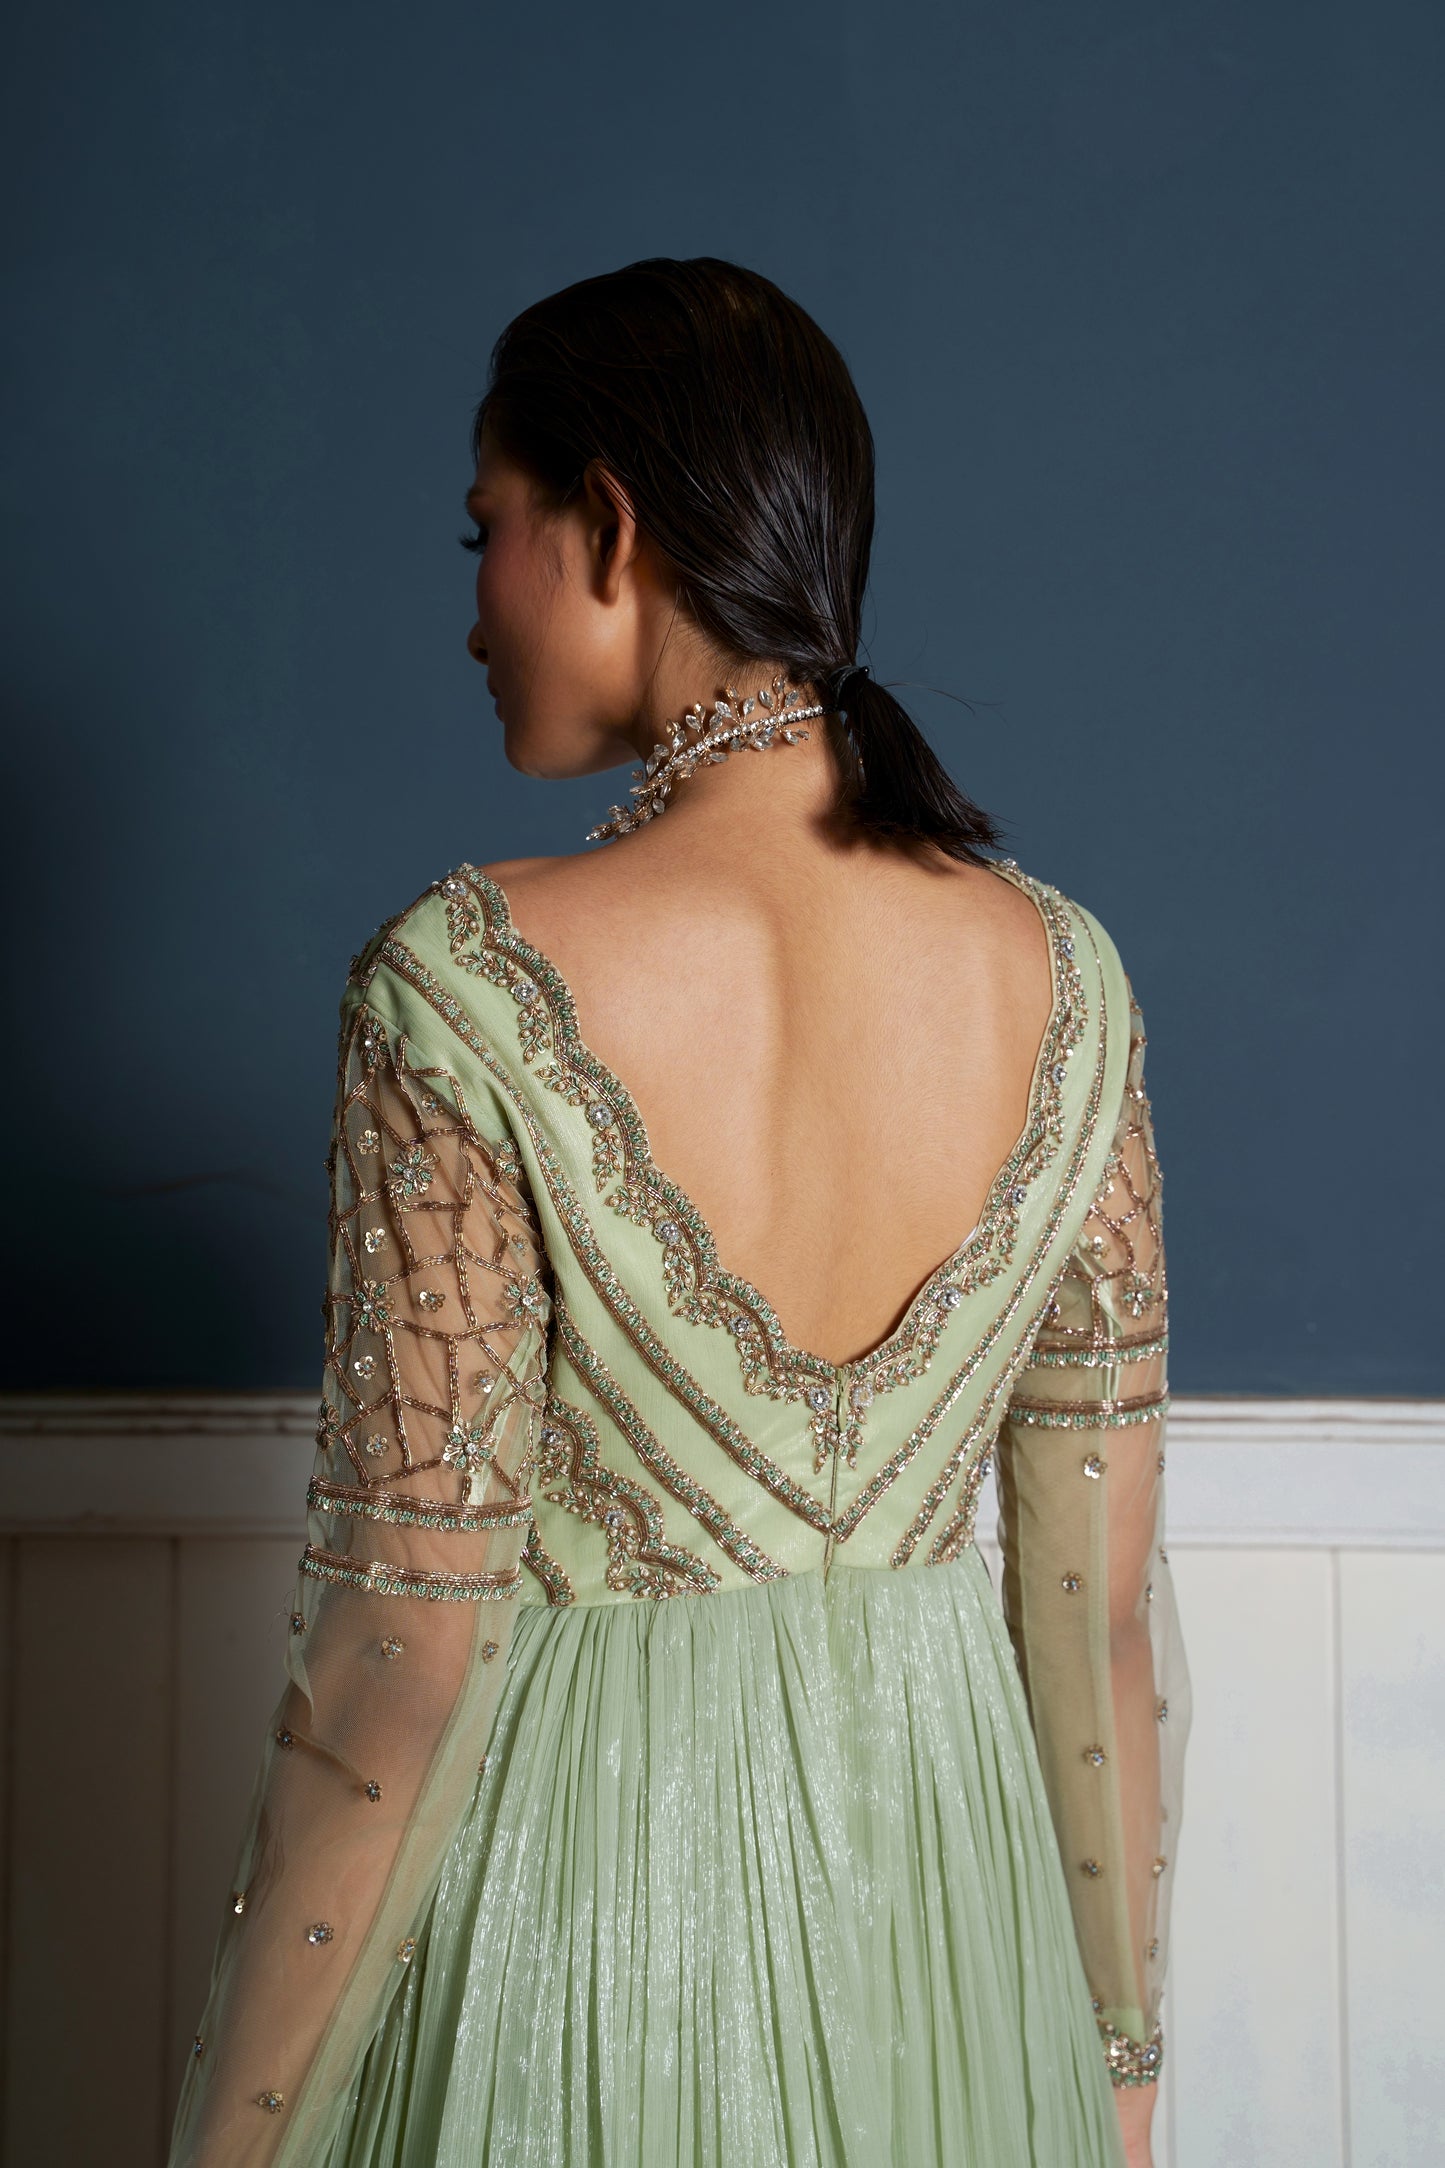 Tara-Breath of spring embroidered dress